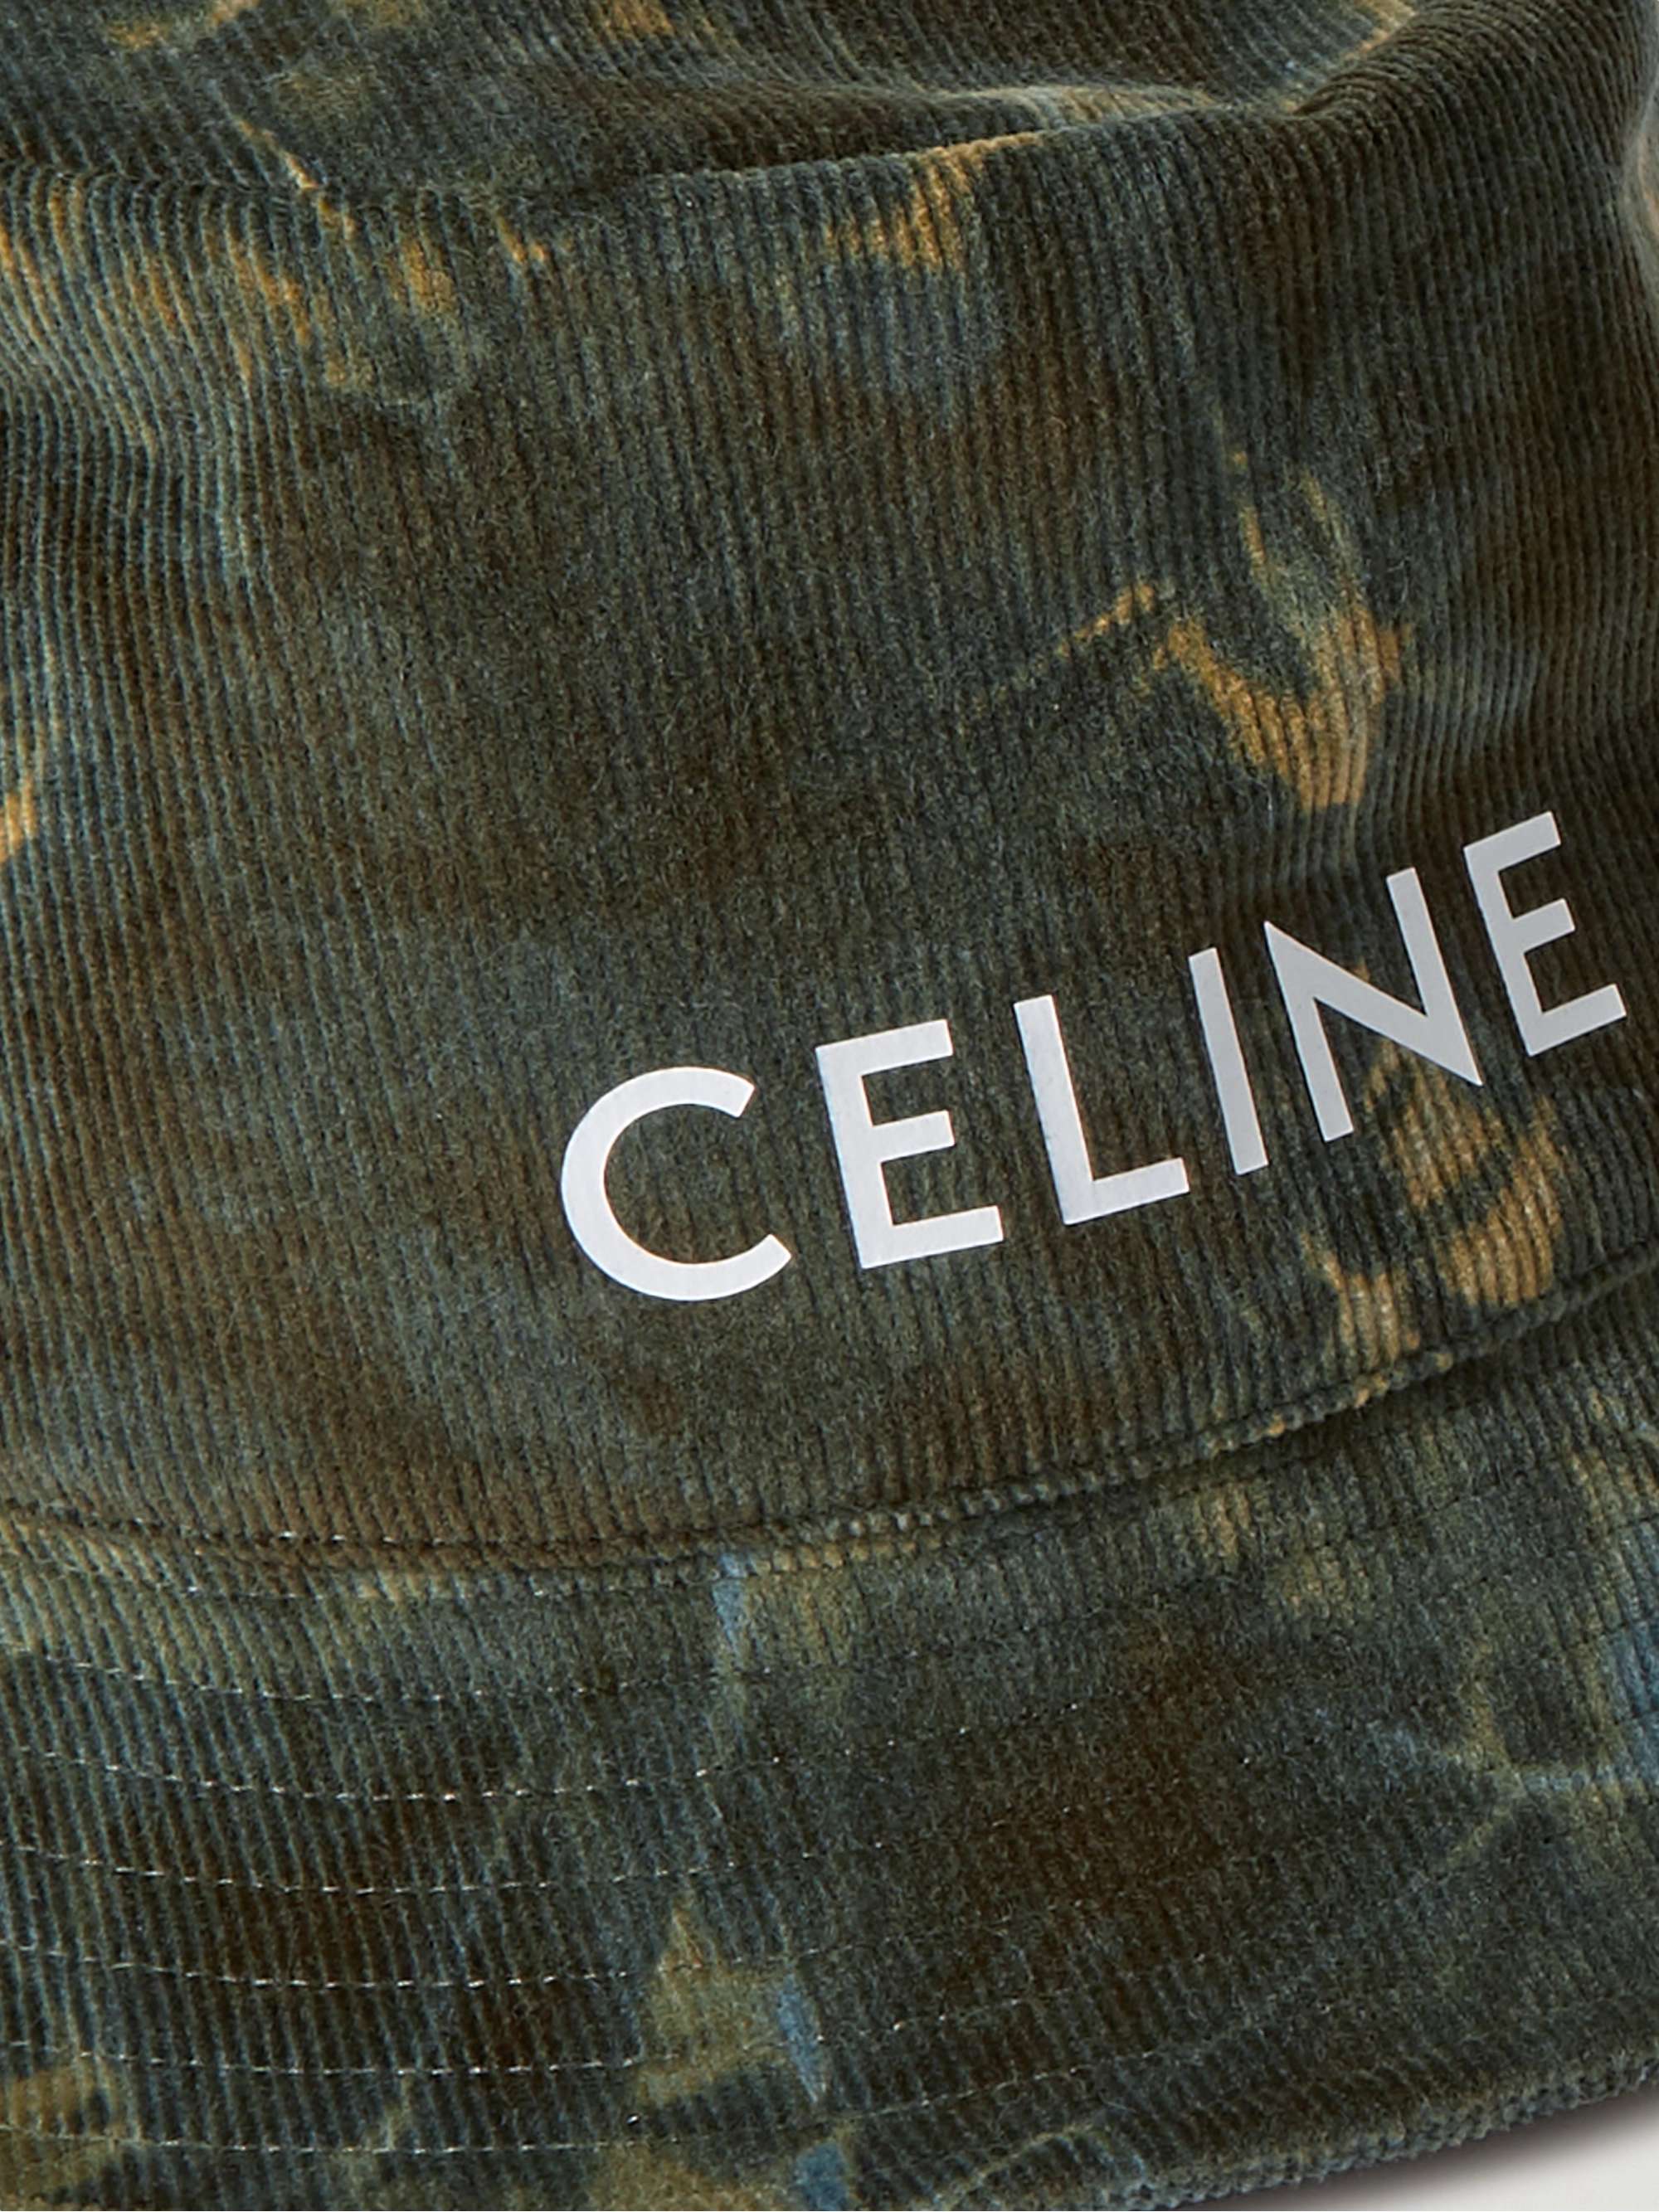 CELINE HOMME Logo-Print Tie-Dyed Cotton-Corduroy Bucket Hat